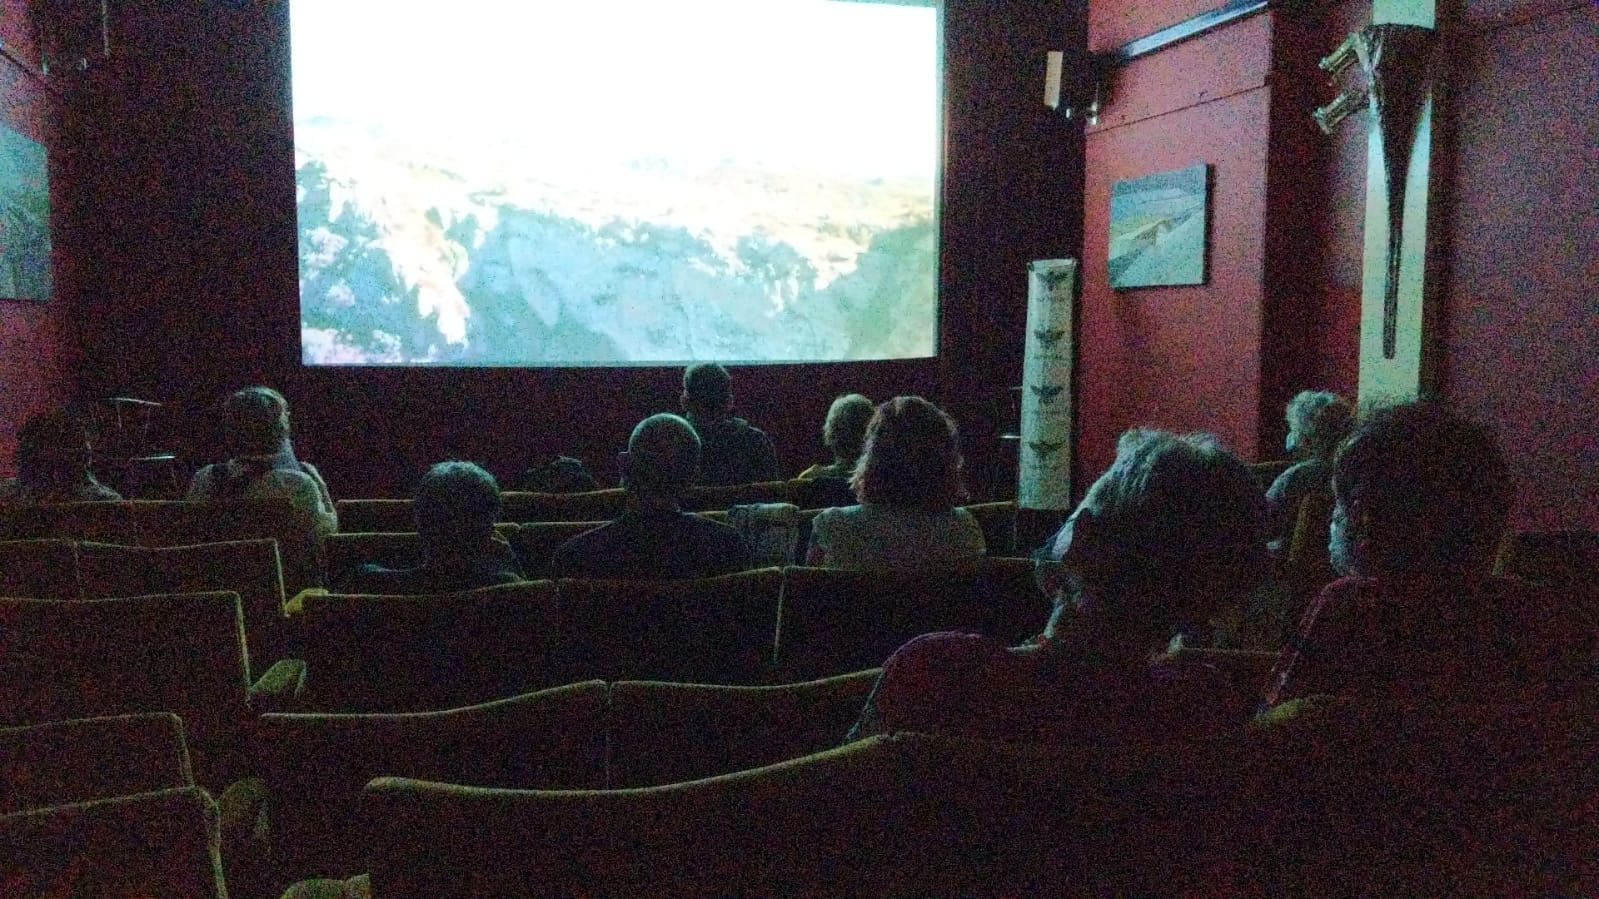 Cinema screening in action during reopening week